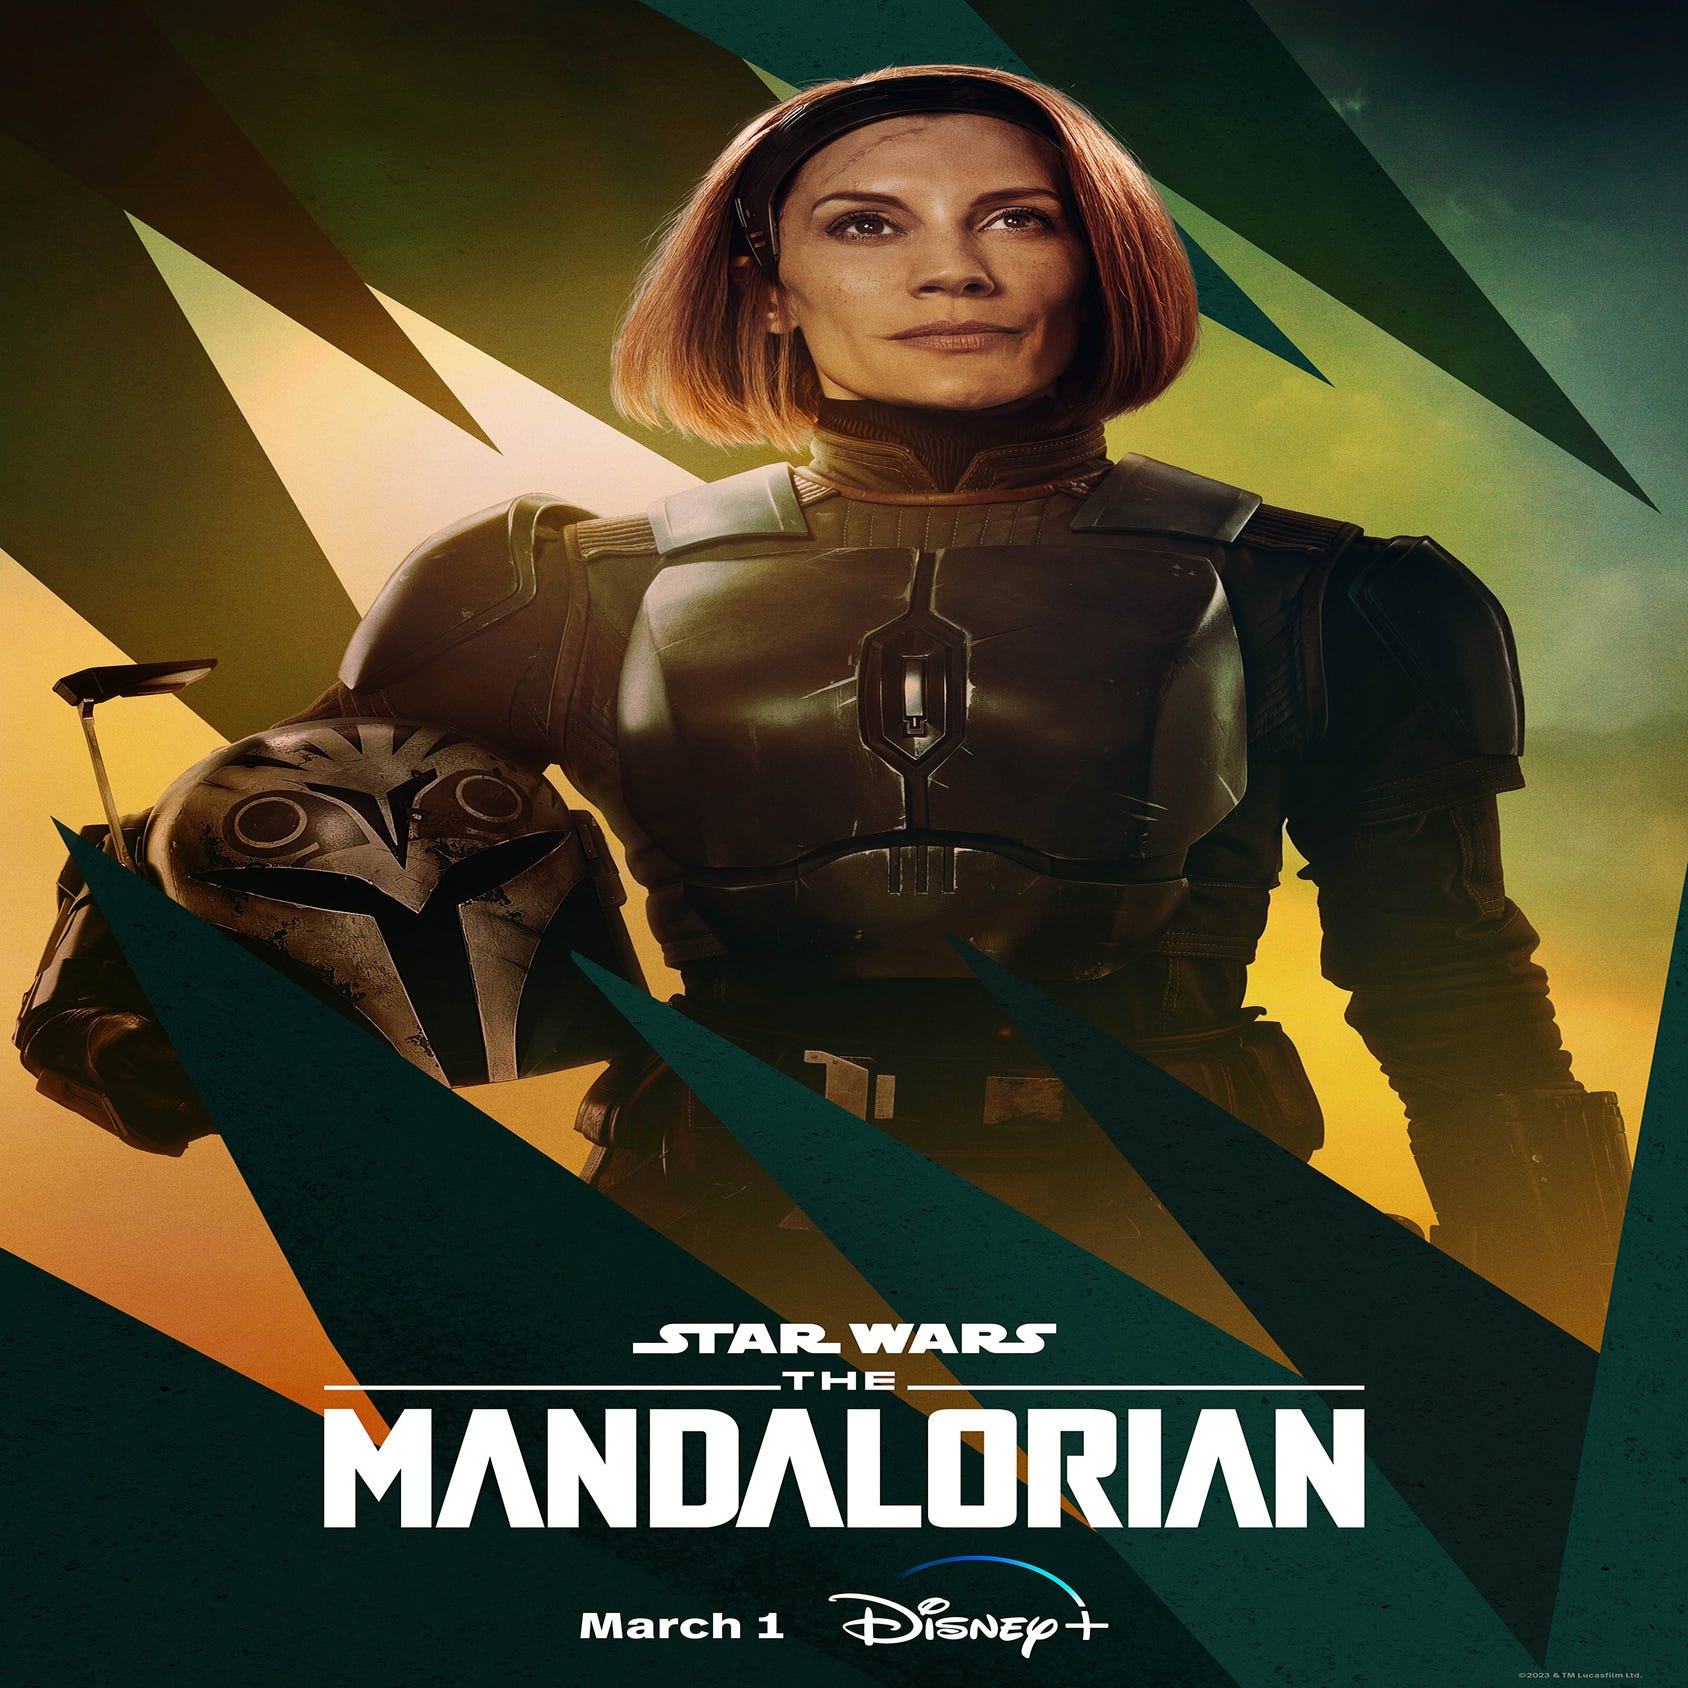 The Mandalorian season 3, episode 1 release date, time, channel